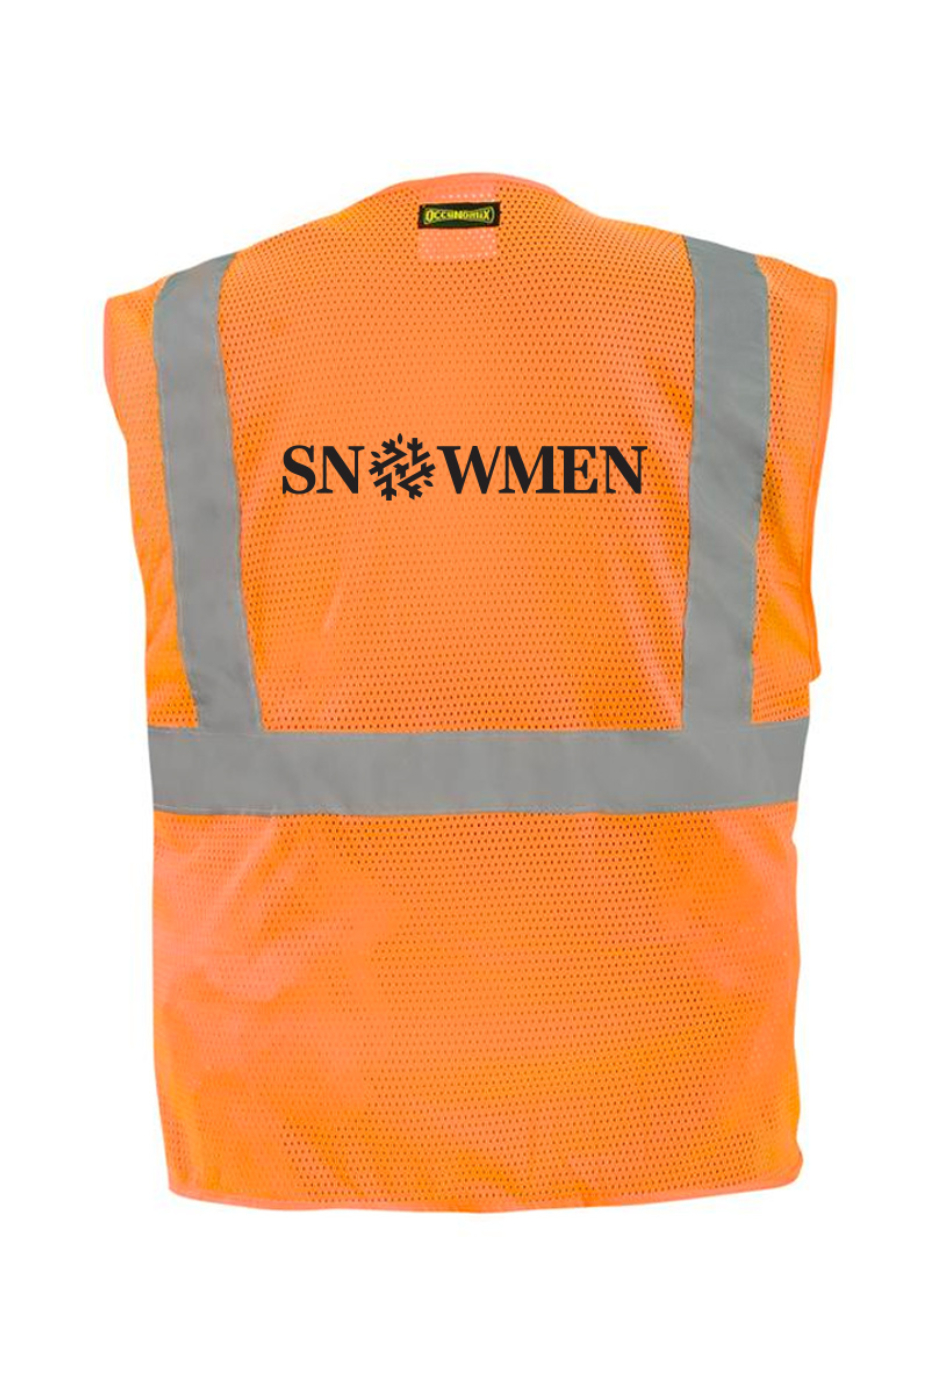 Snowmen Safety Vests With Badge Pocket